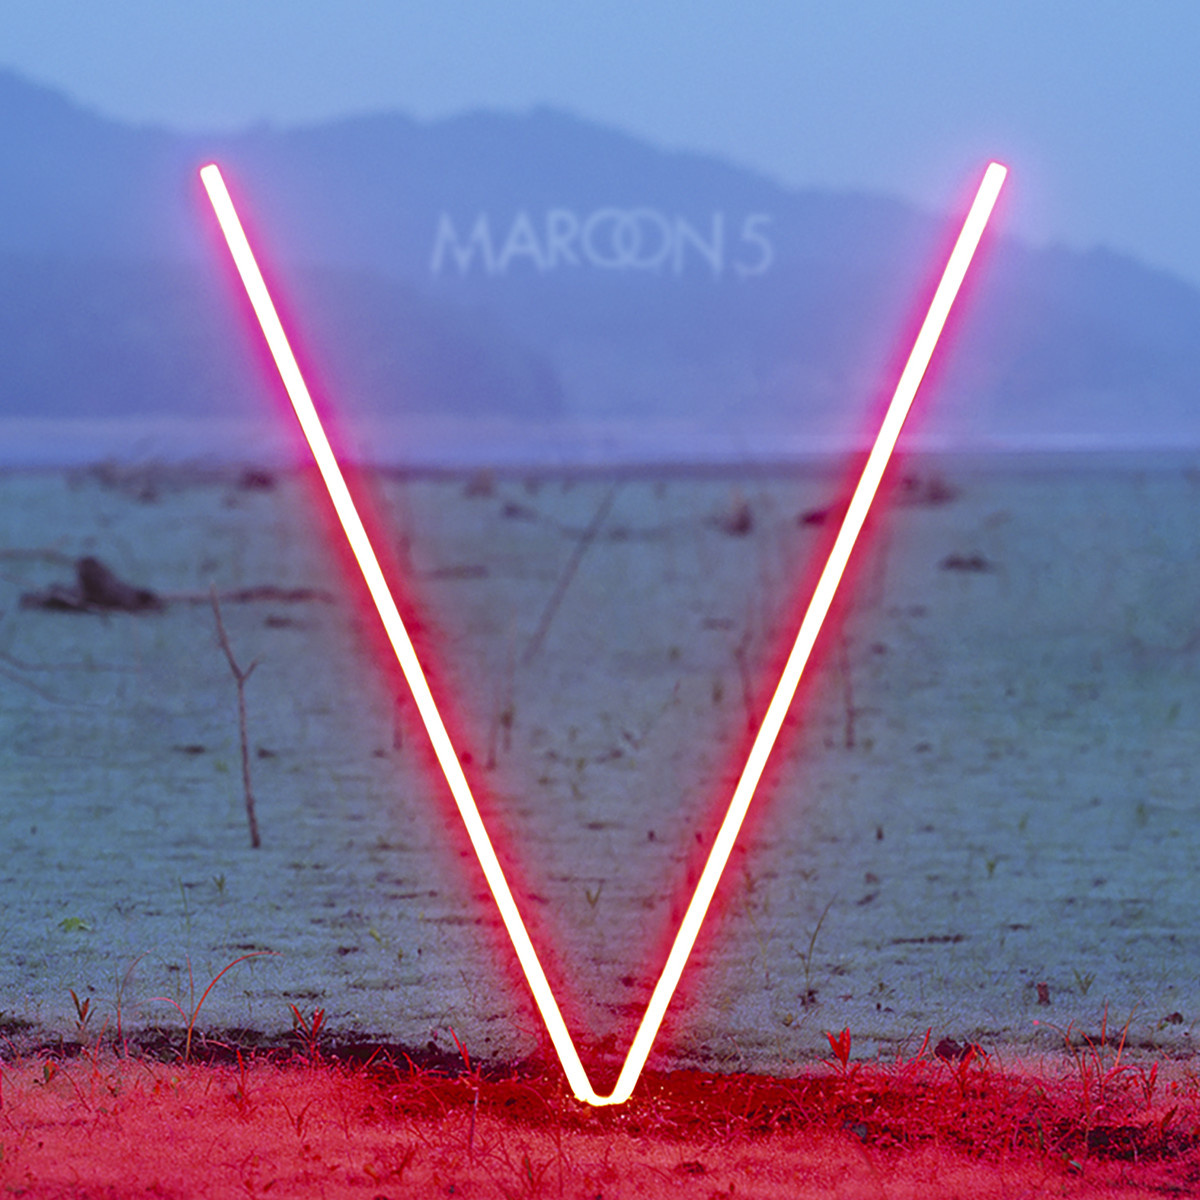 Sugar_Maroon 5_高音质在线试听_Sugar歌词